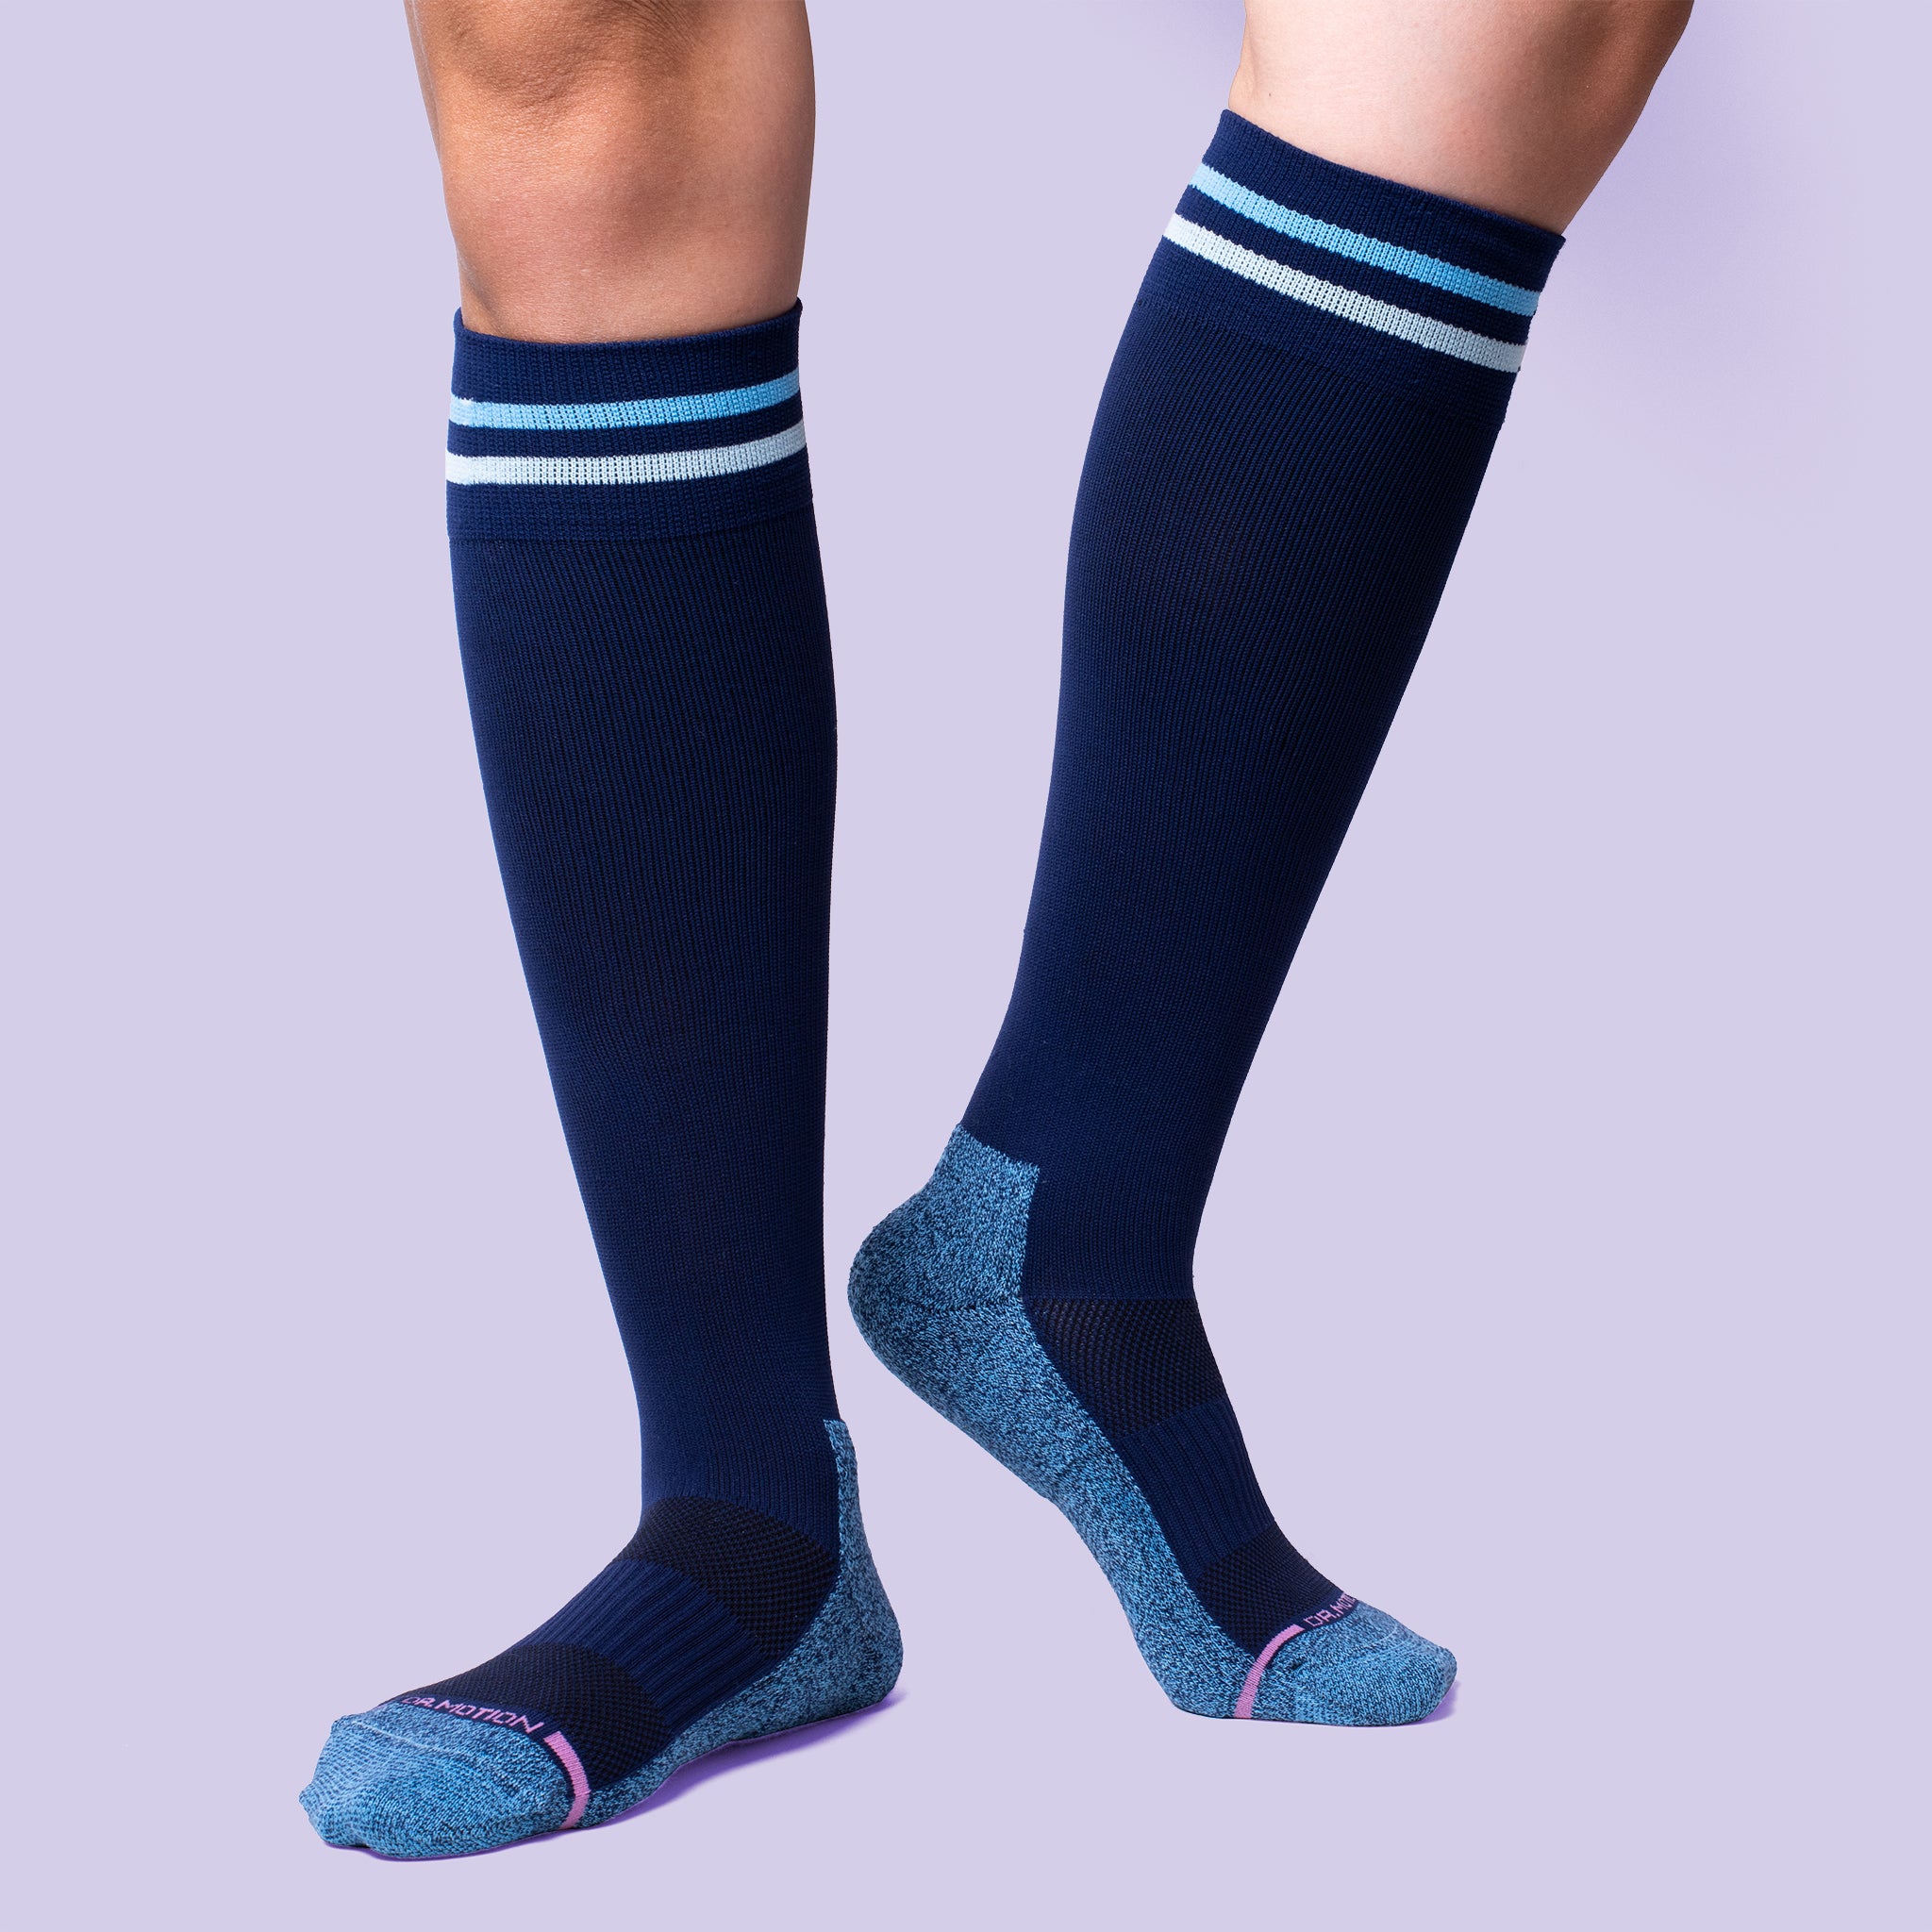 Cuff Stripe | Knee-High Compression Socks For Women